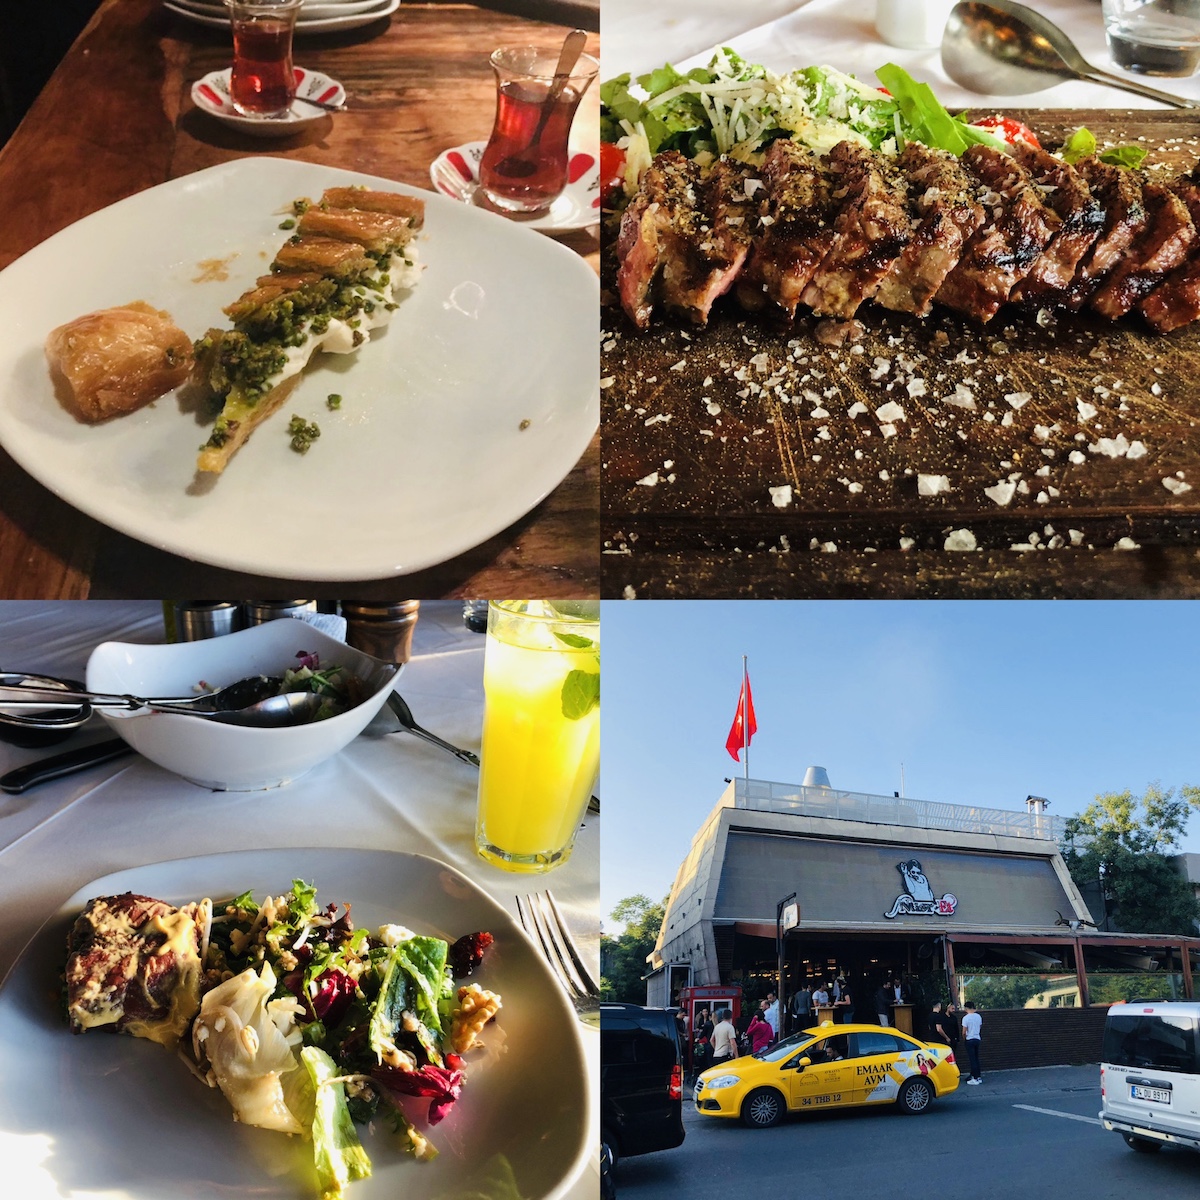 Review: Nusret Istanbul (aka the Salt Bae Restaurant)